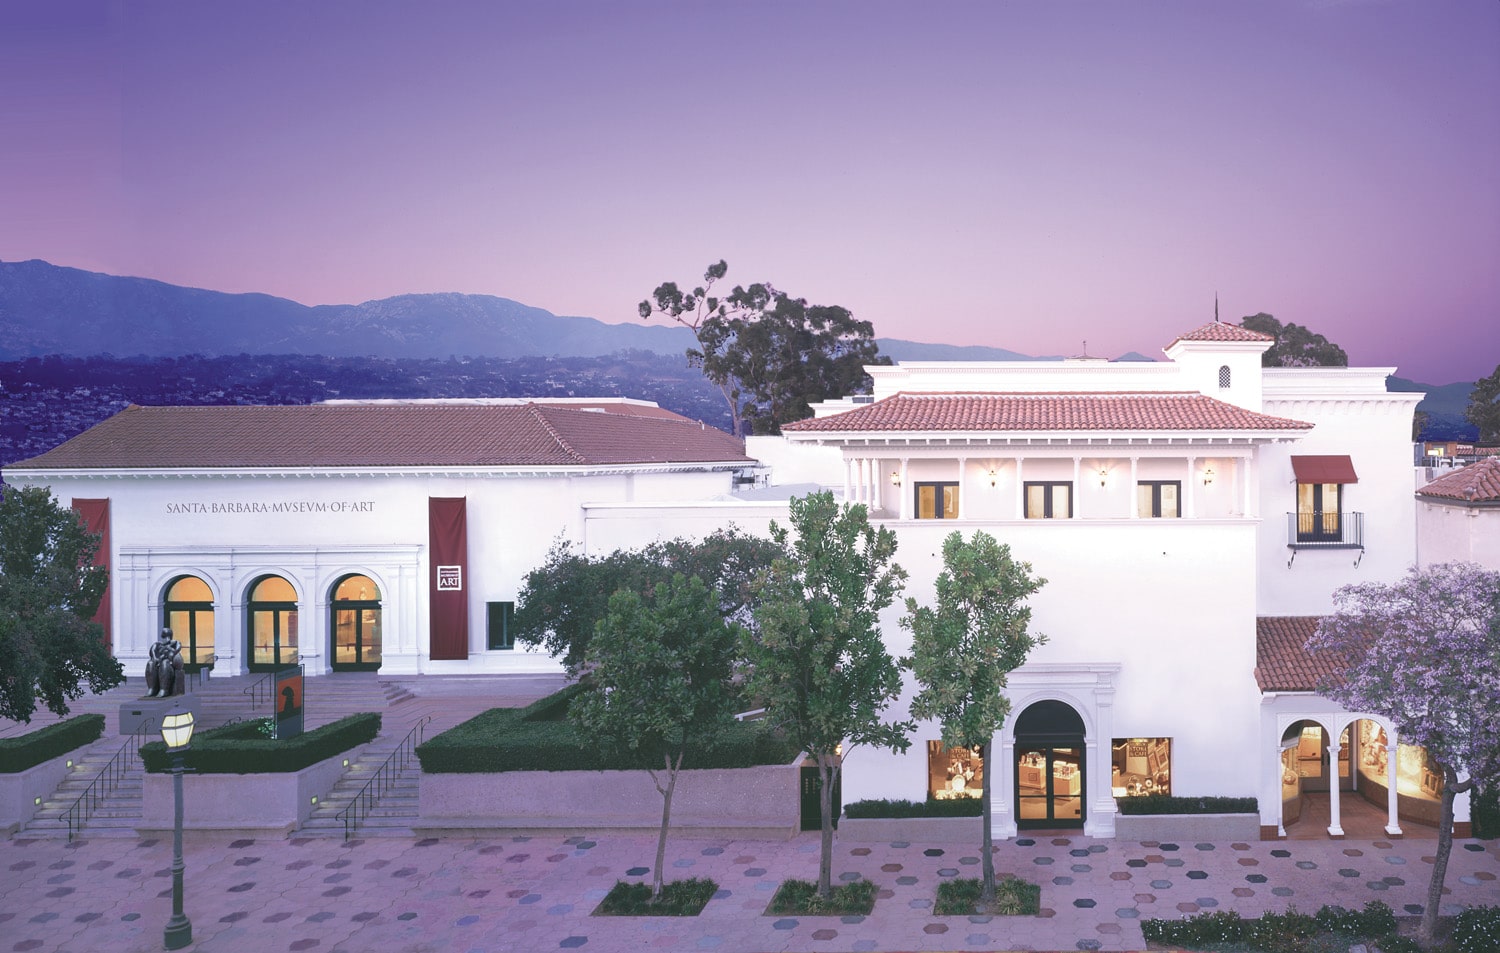 Santa Barbara Museum of Art Entrance